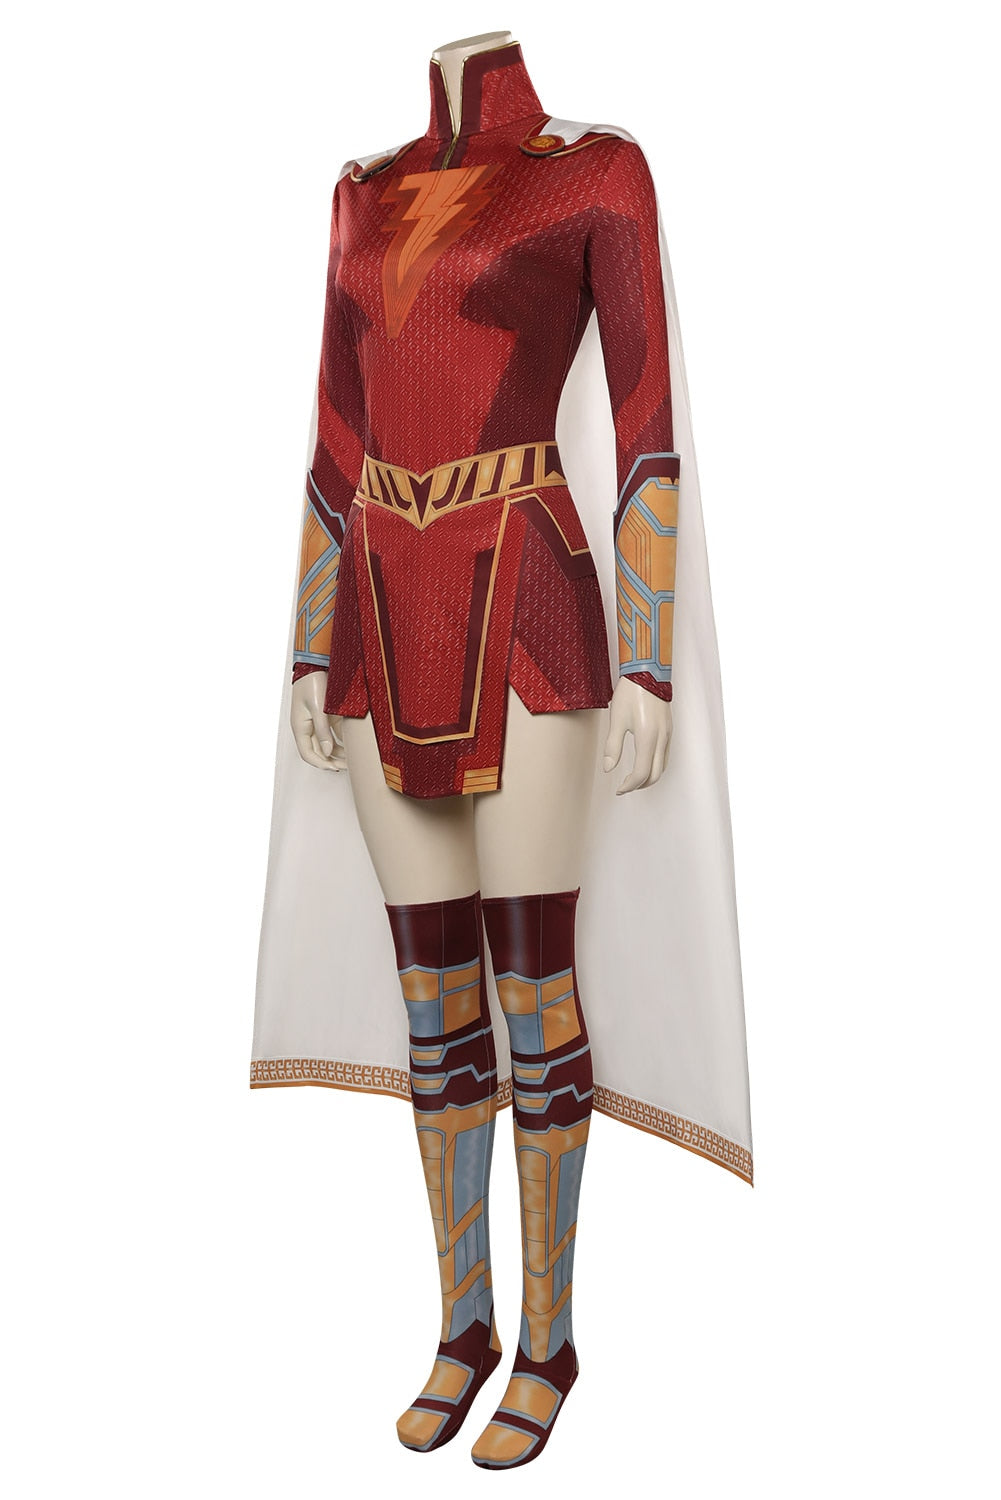 Mary Shazam Cosplay Costume for Women